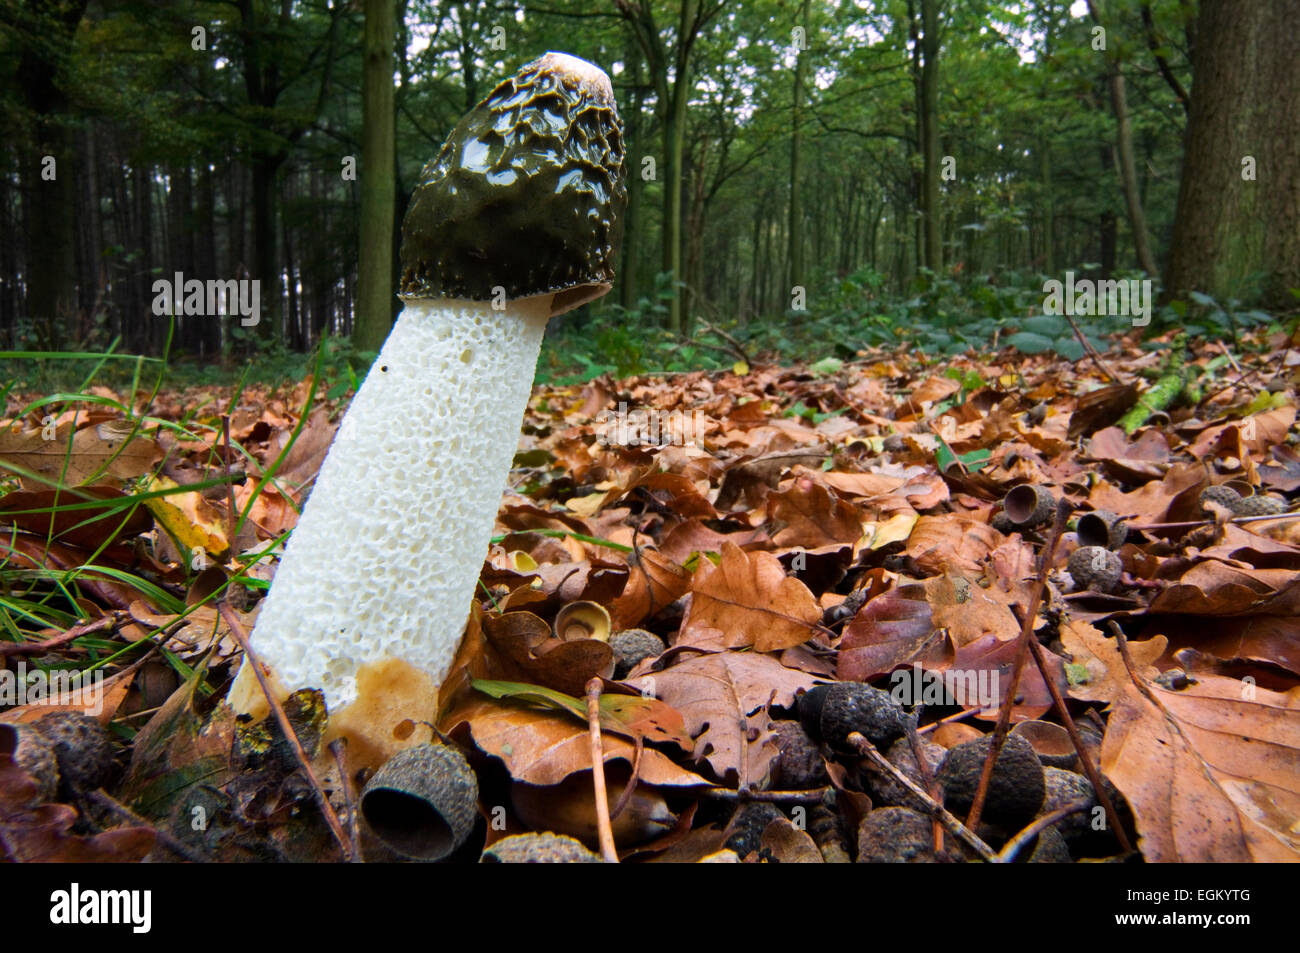 Common stinkhorn / dickes-nipes (Phallus impudicus) in autumn forest Stock Photo